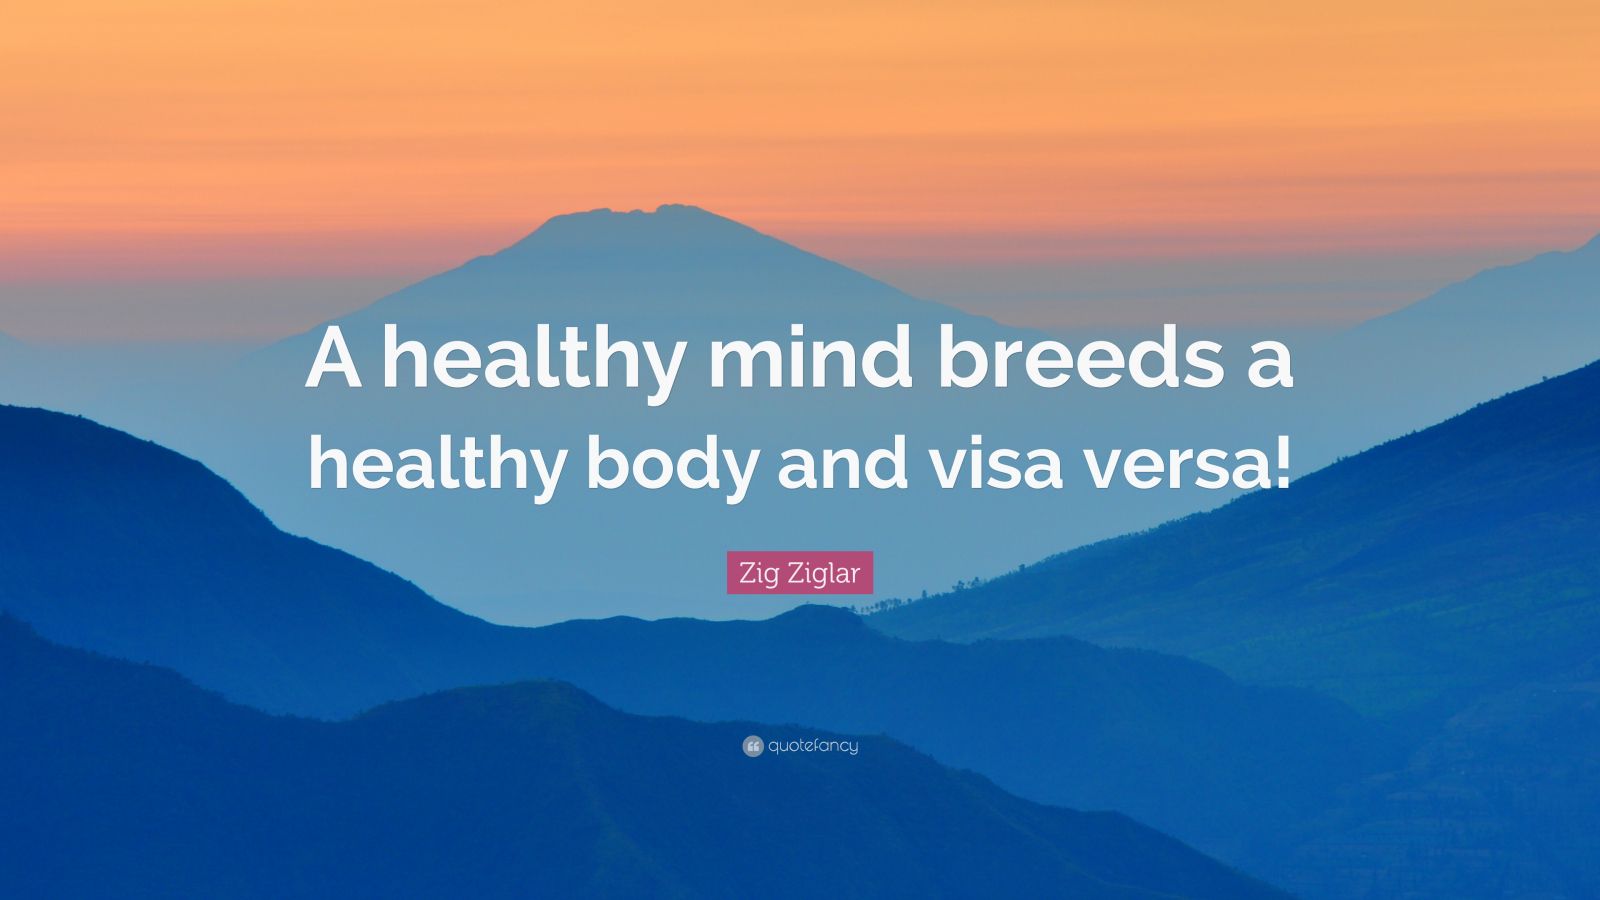 Zig Ziglar Quote: “A healthy mind breeds a healthy body and visa versa